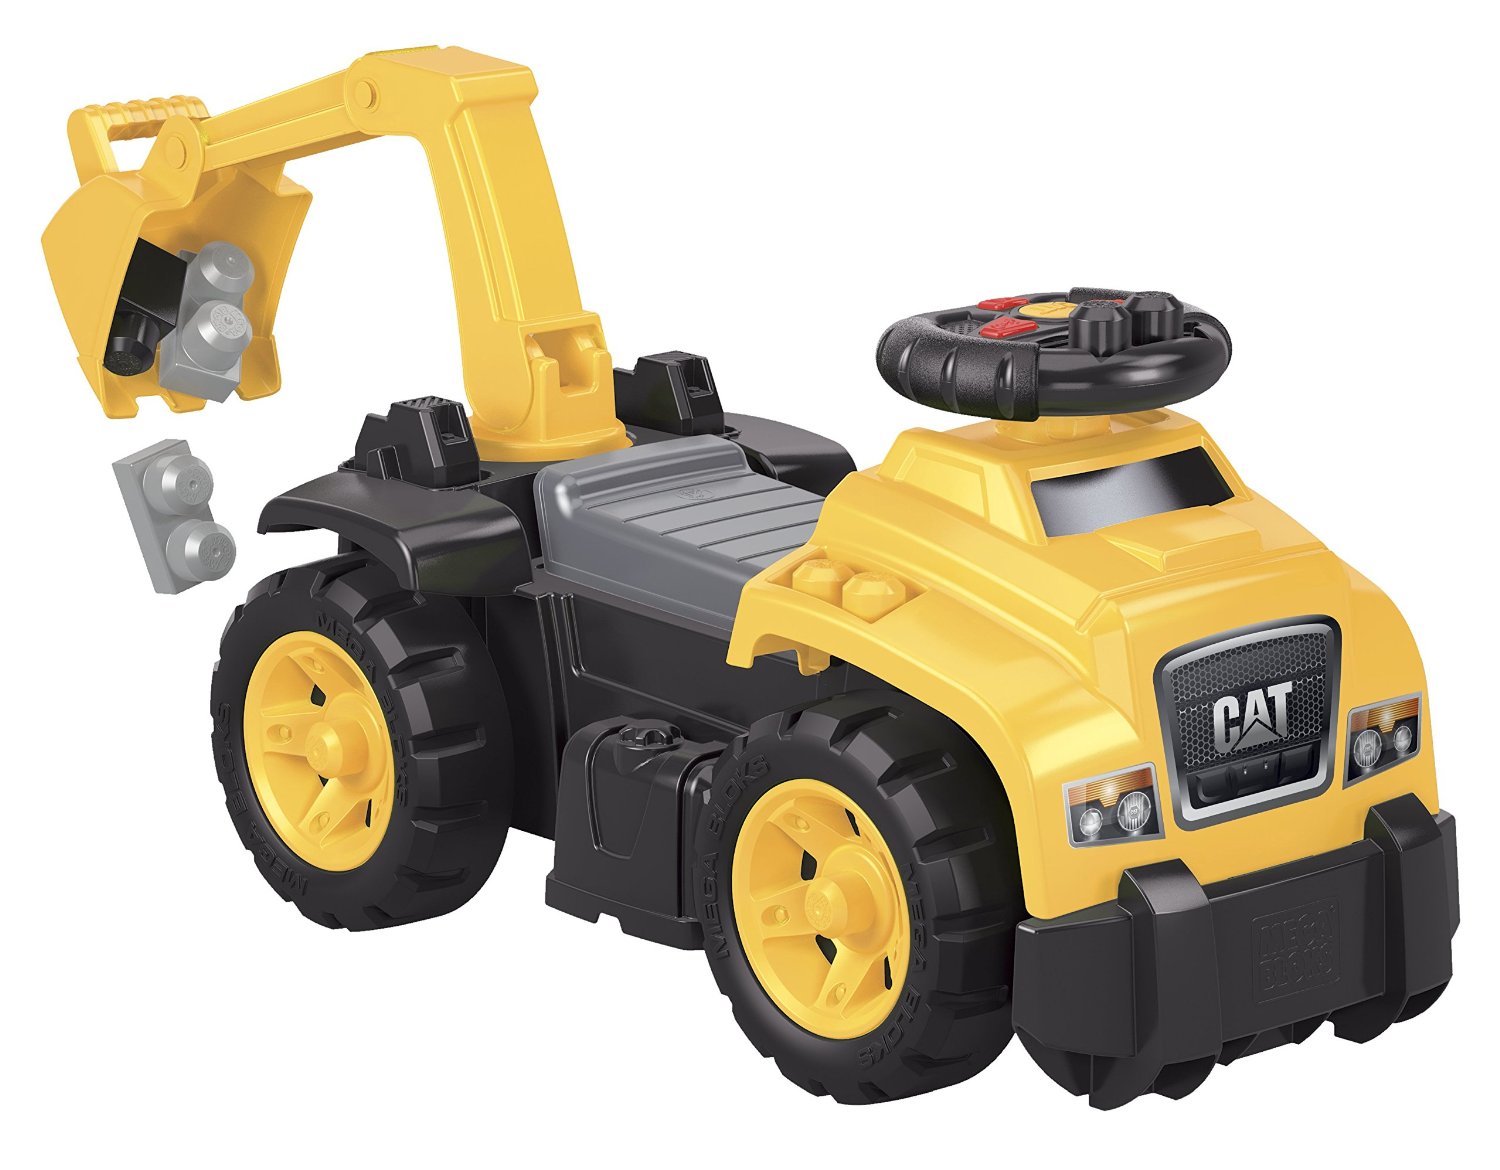 Mega Bloks Ride On Caterpillar with Excavator – Just $33.61!